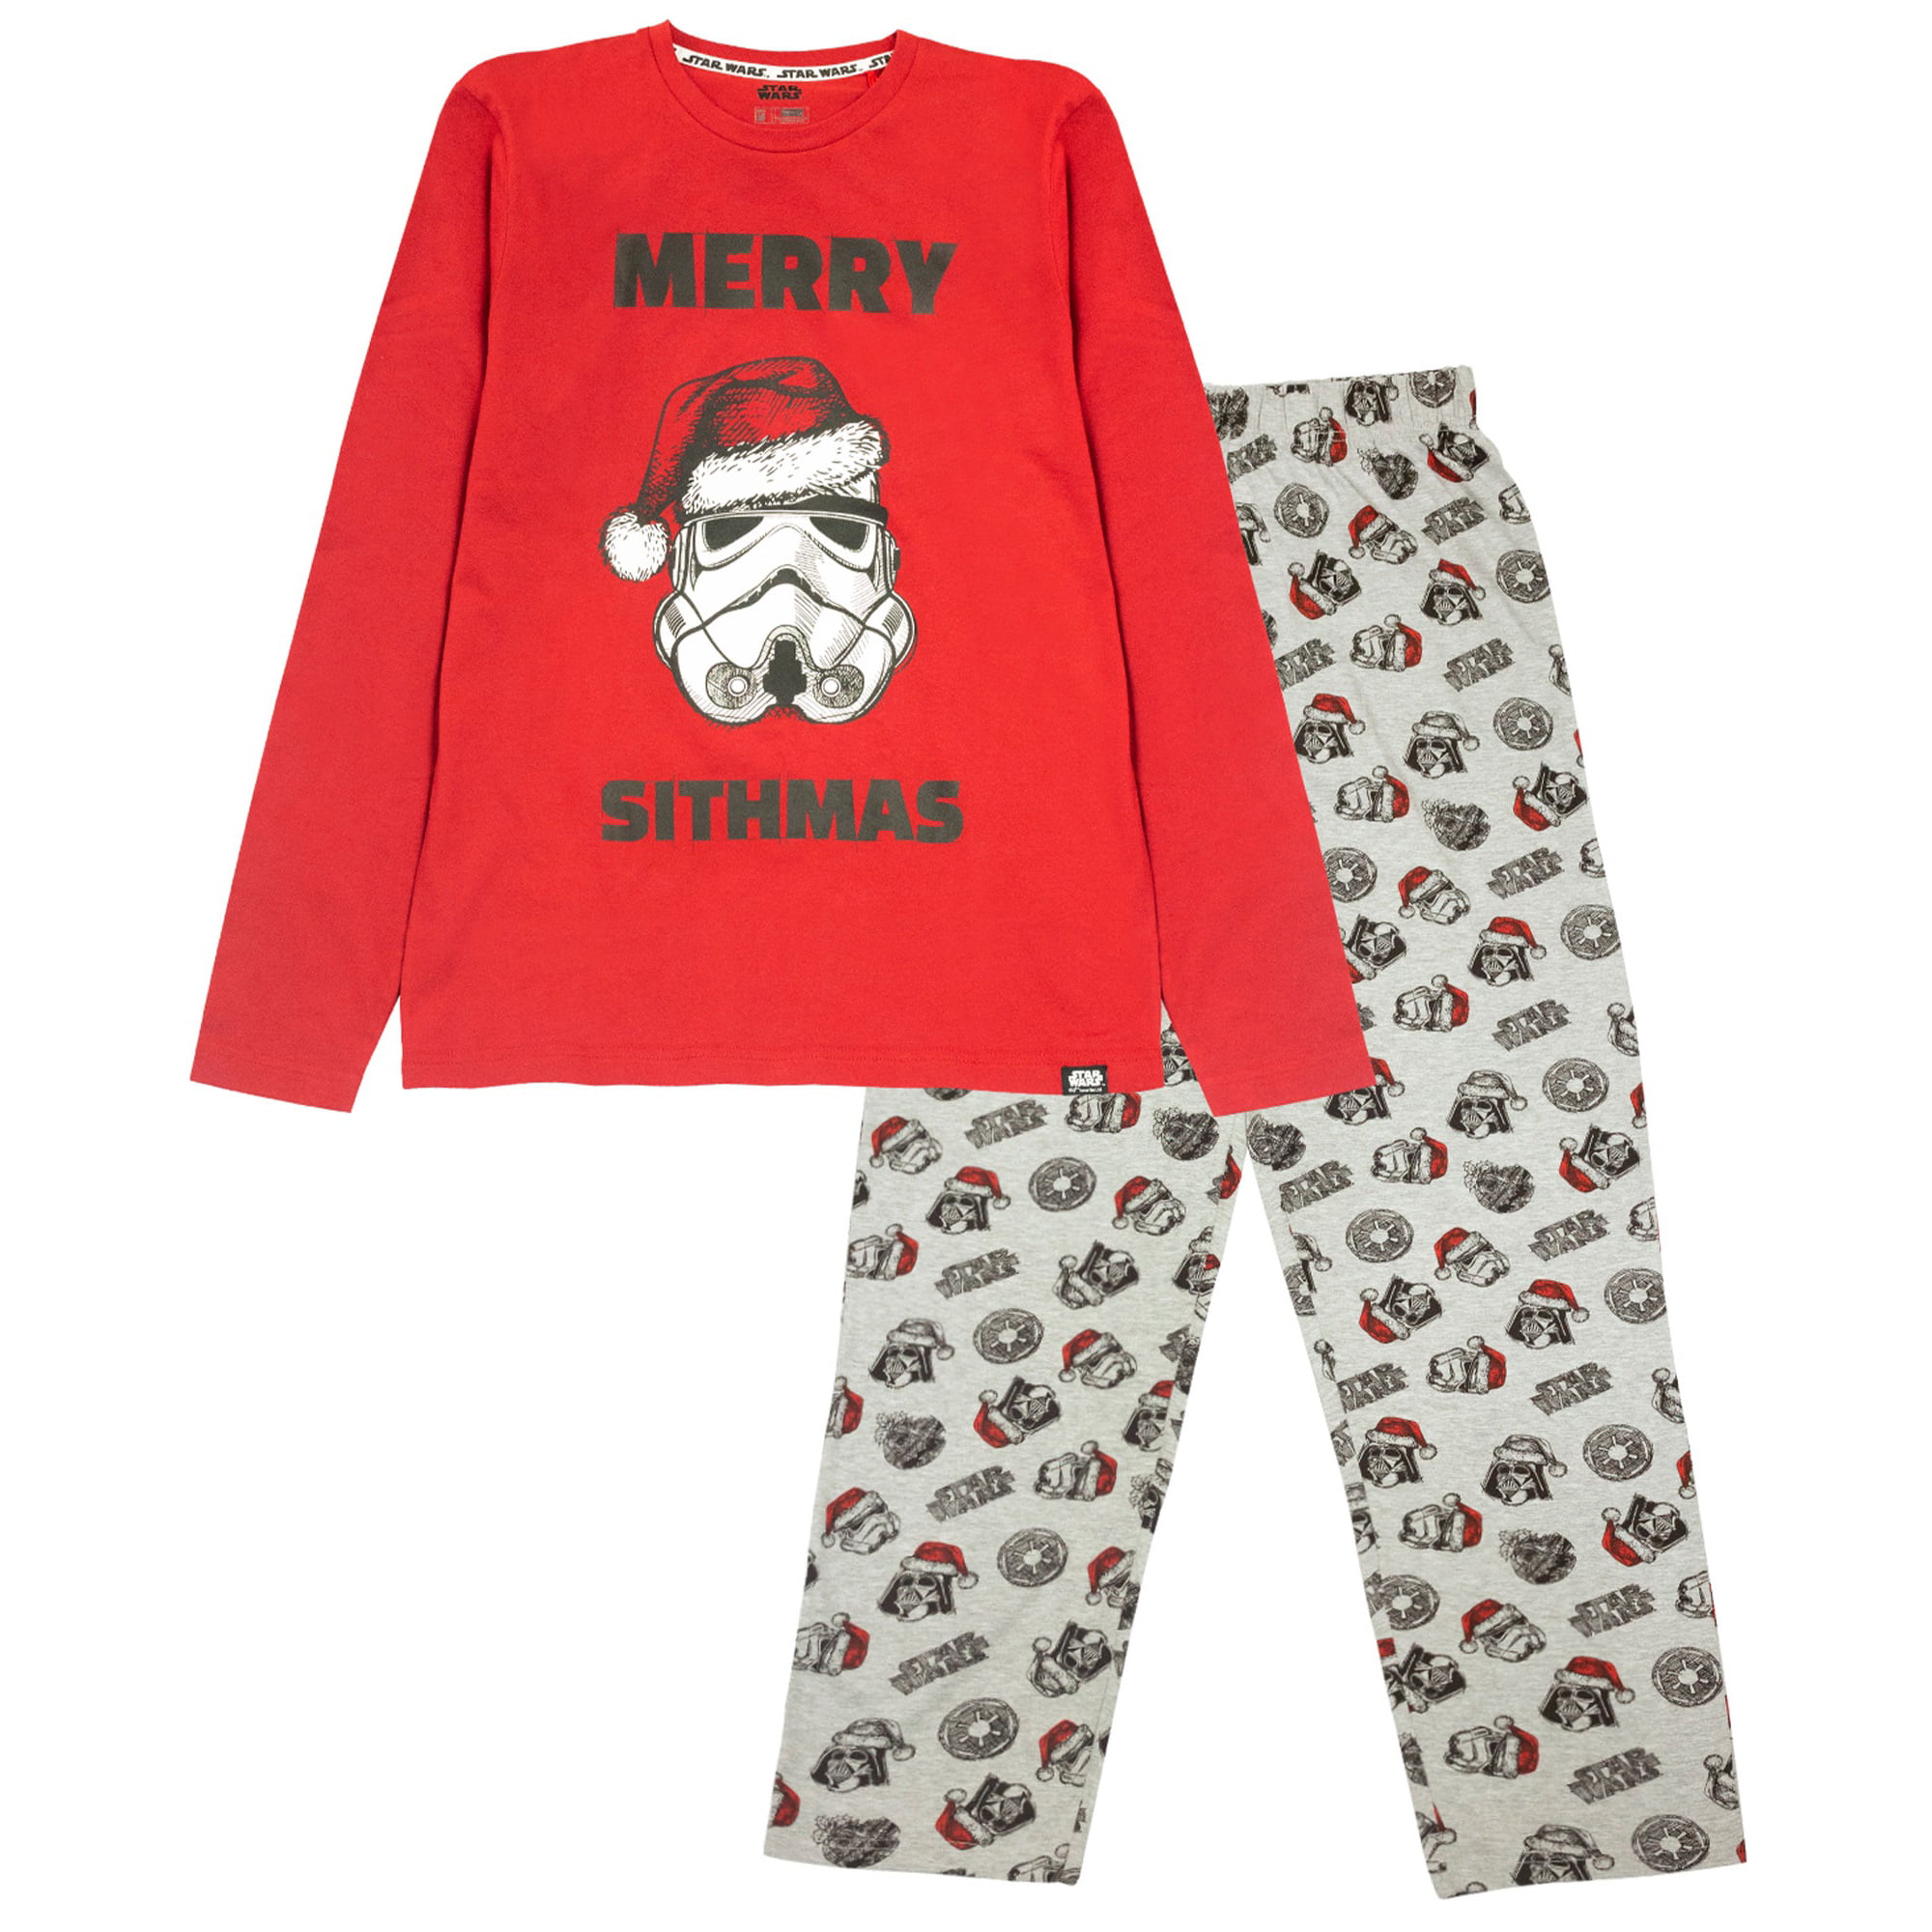 Visiter la boutique Star WarsStar Wars Trooper Pyjama Set Ensemble de Pijama Homme 